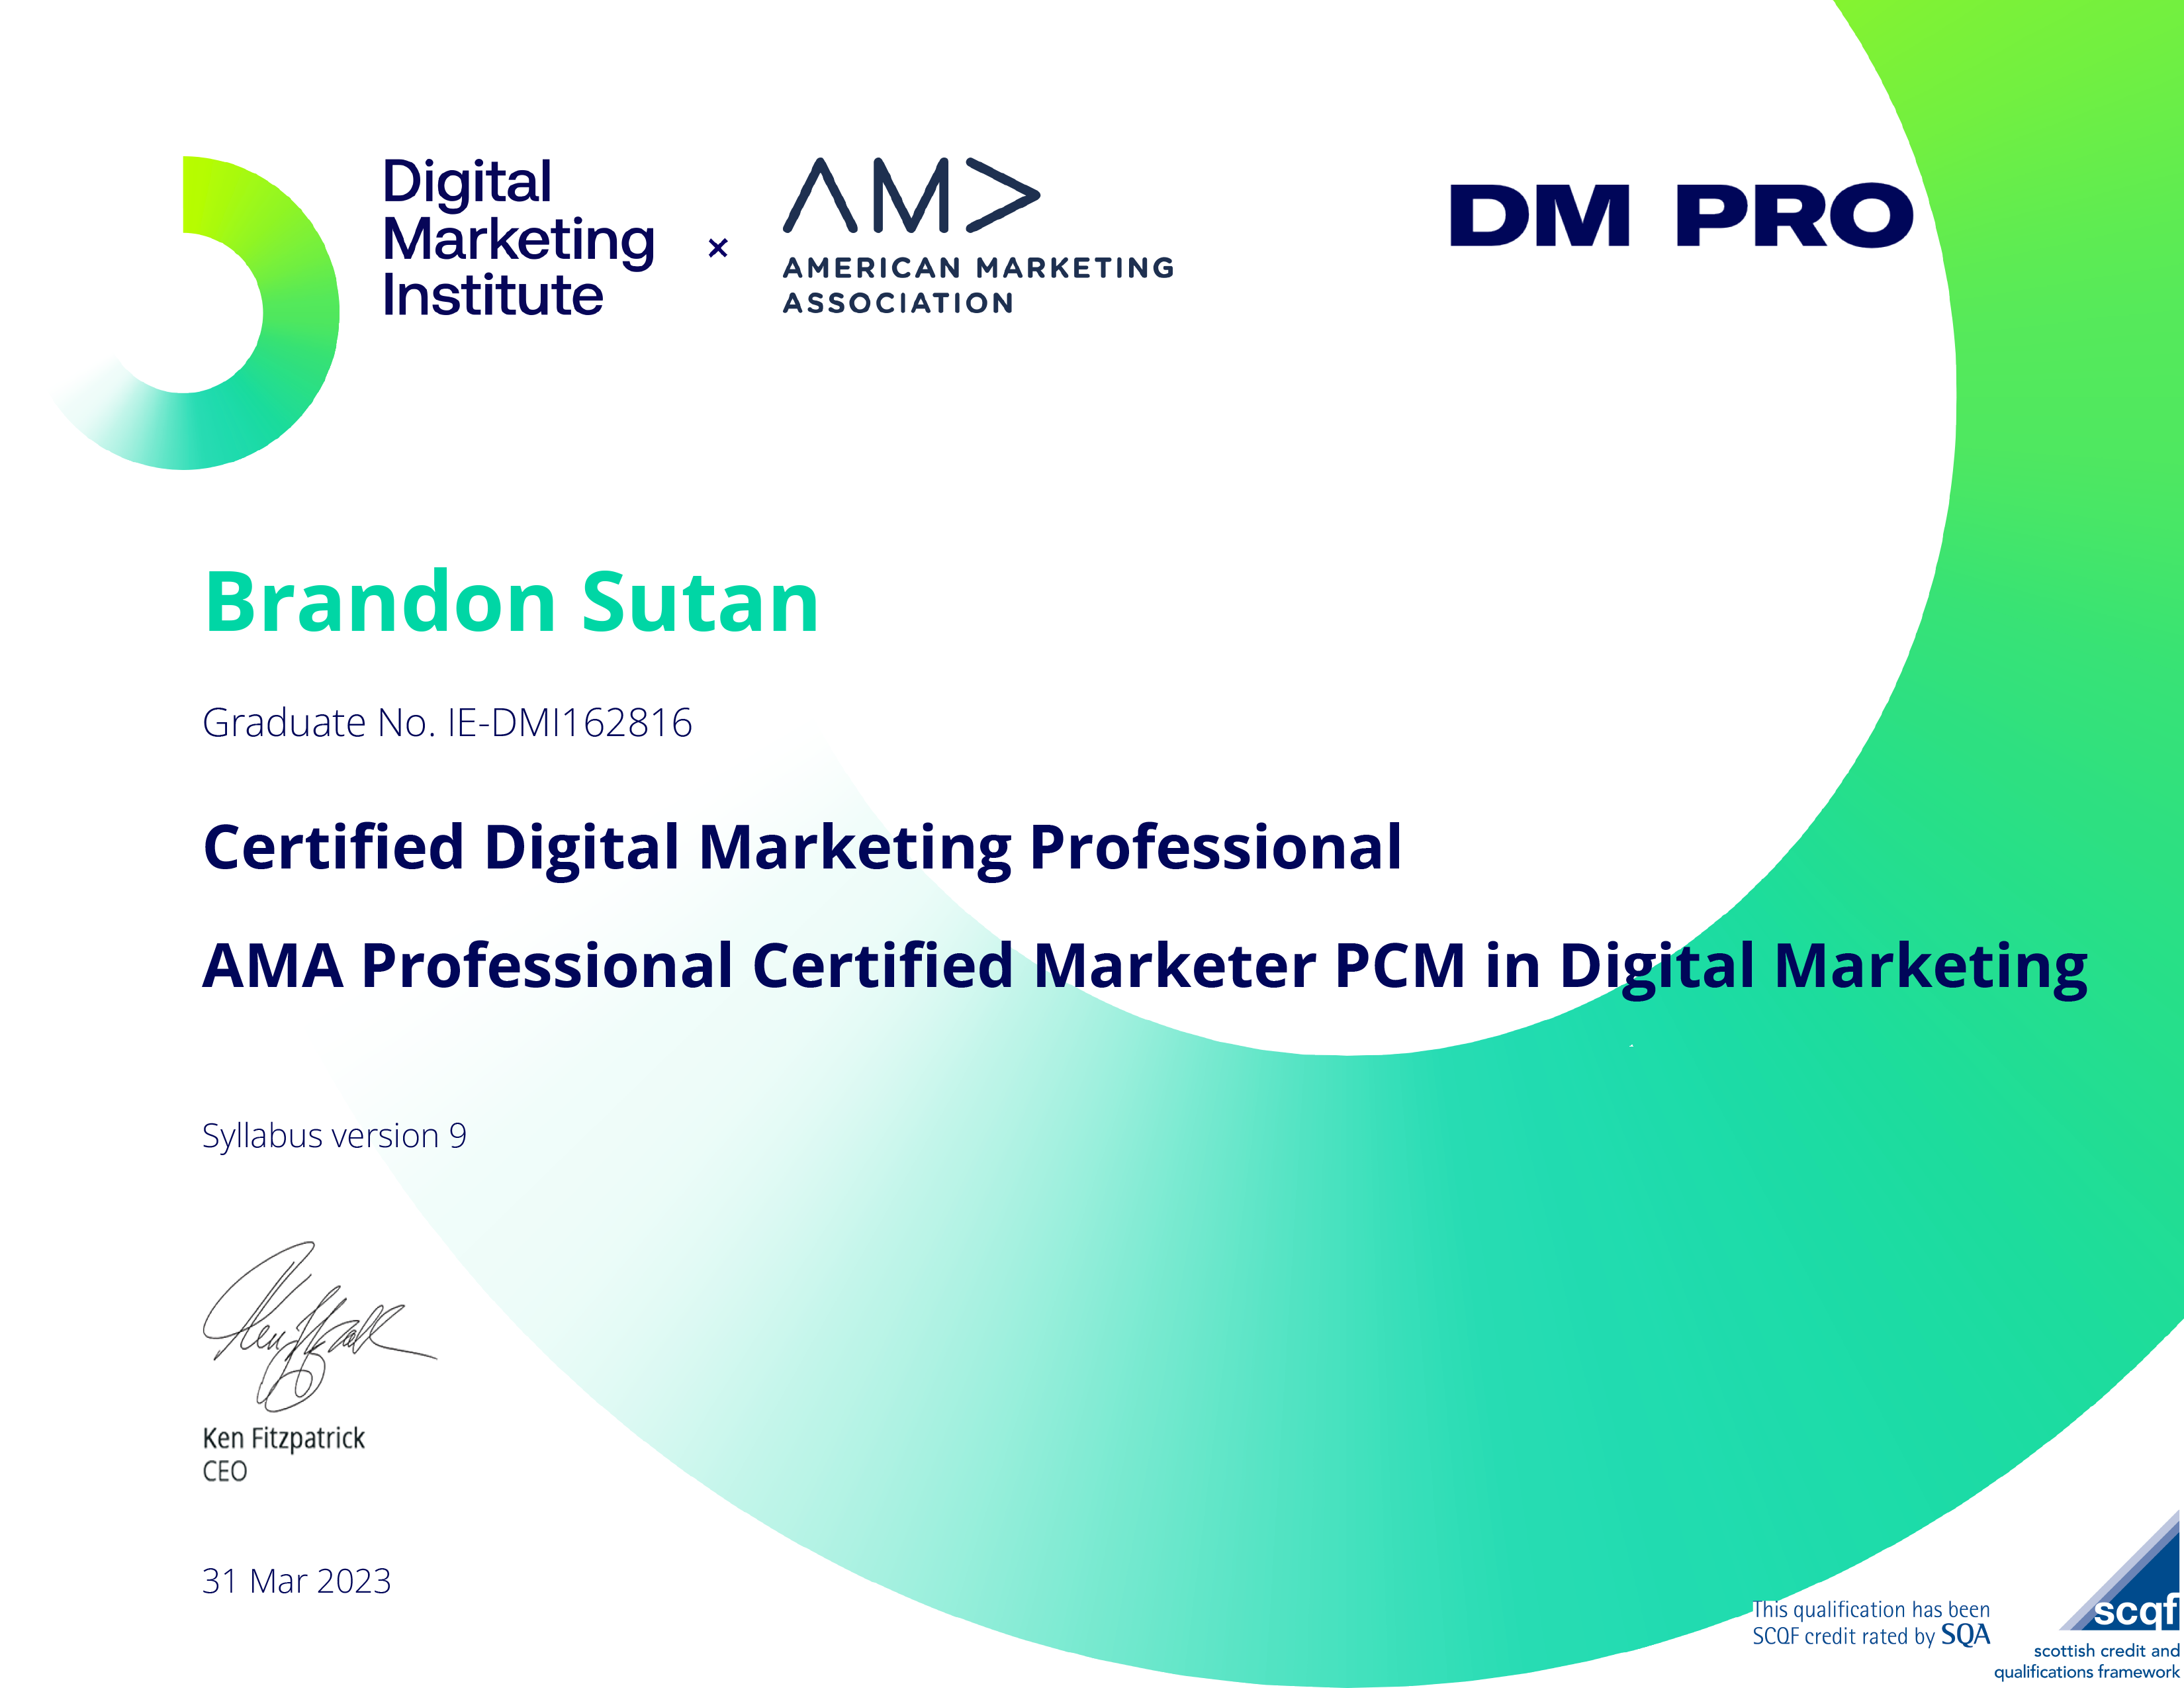 Digital Marketing Institute Certification